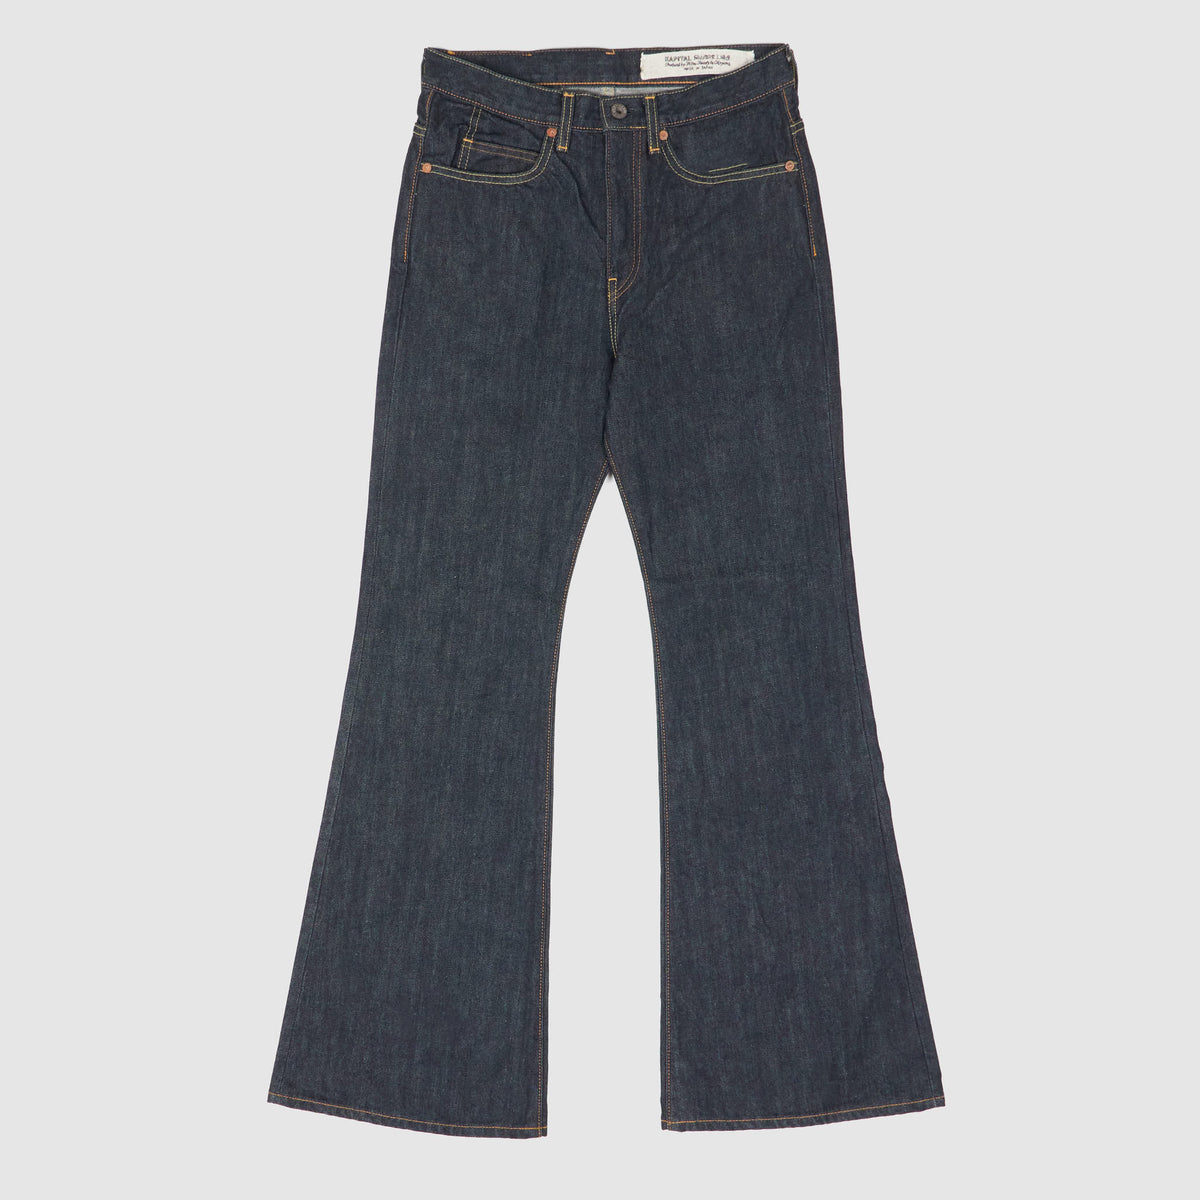 Kapital 5-Pocket 14oz Okabellbo Flair Jeans